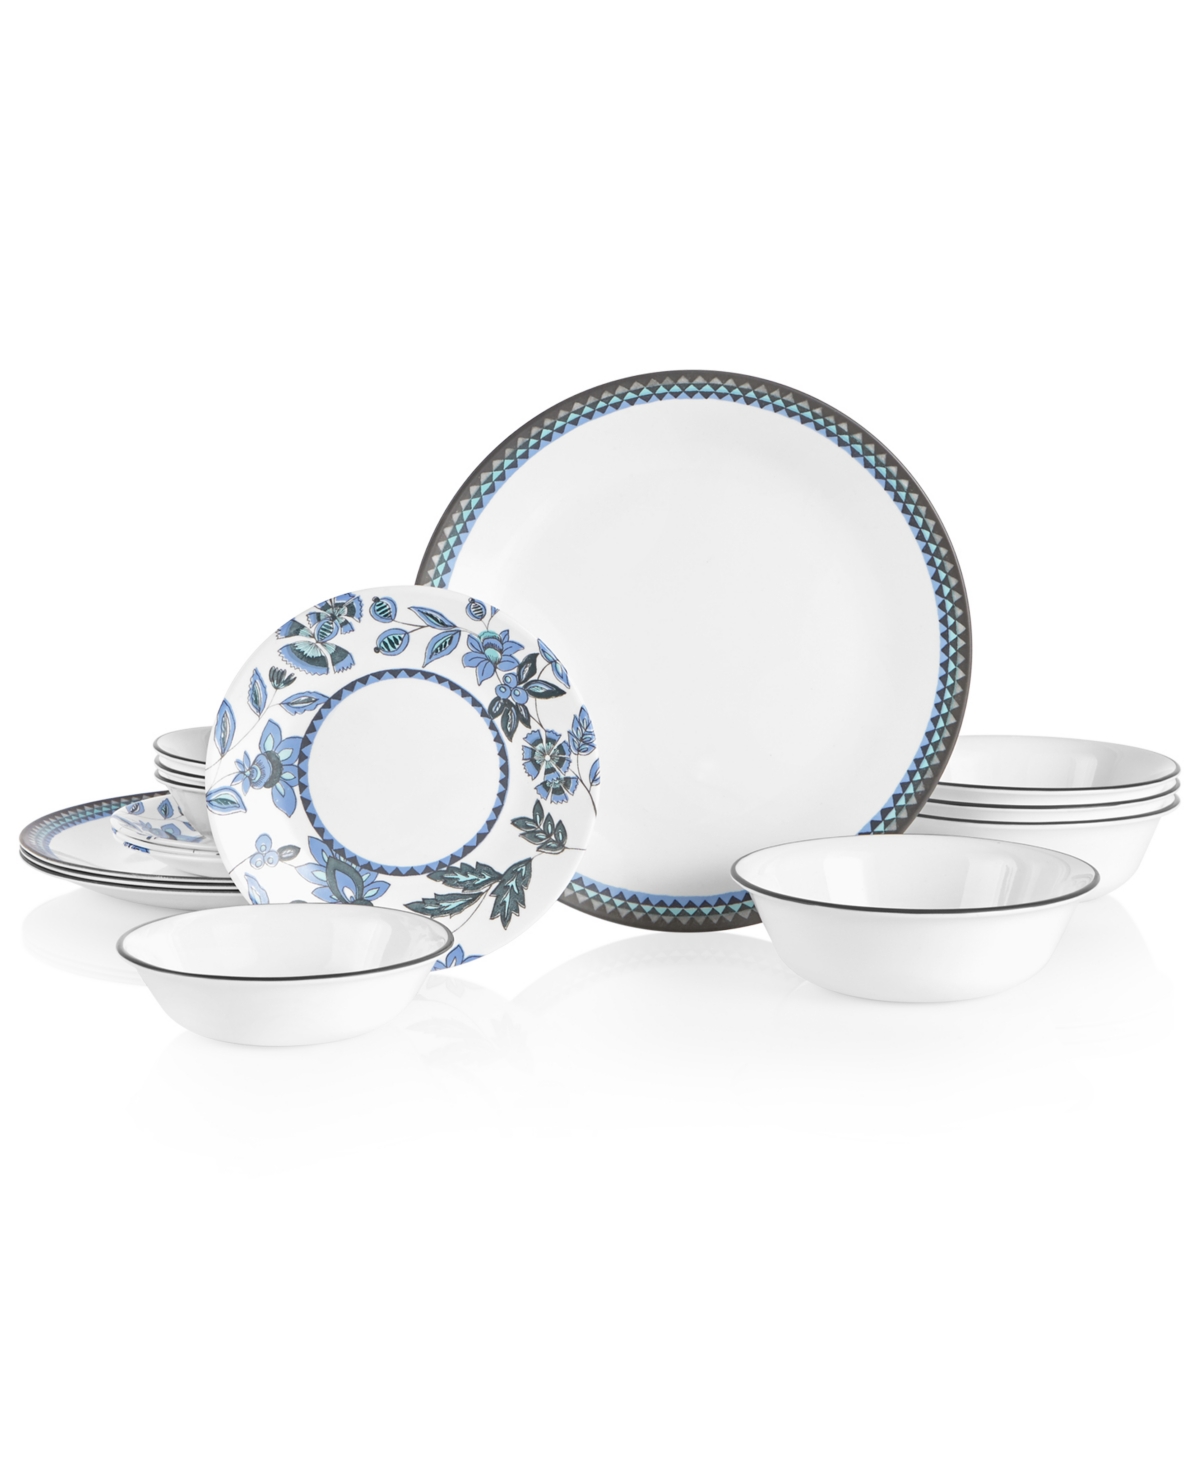 Veranda 16-Piece Dinnerware Set, Service for 4 - White with Deep Blues and Rich Aquas